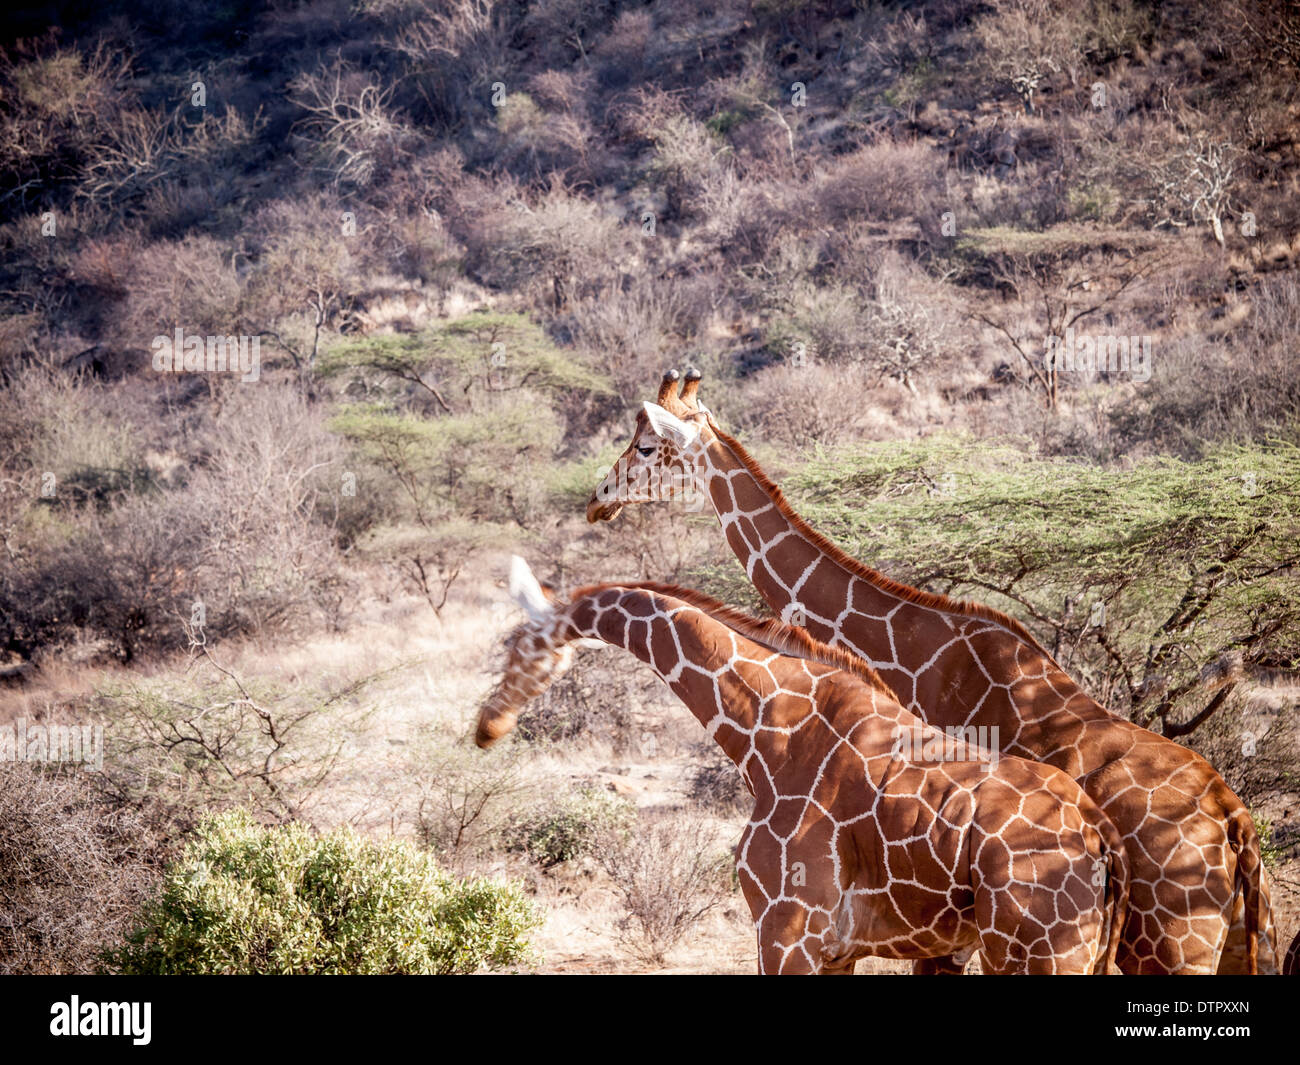 Reticulated giraffe, Giraffa camelopardalis reticulata on safari, Kenya, Africa Stock Photo